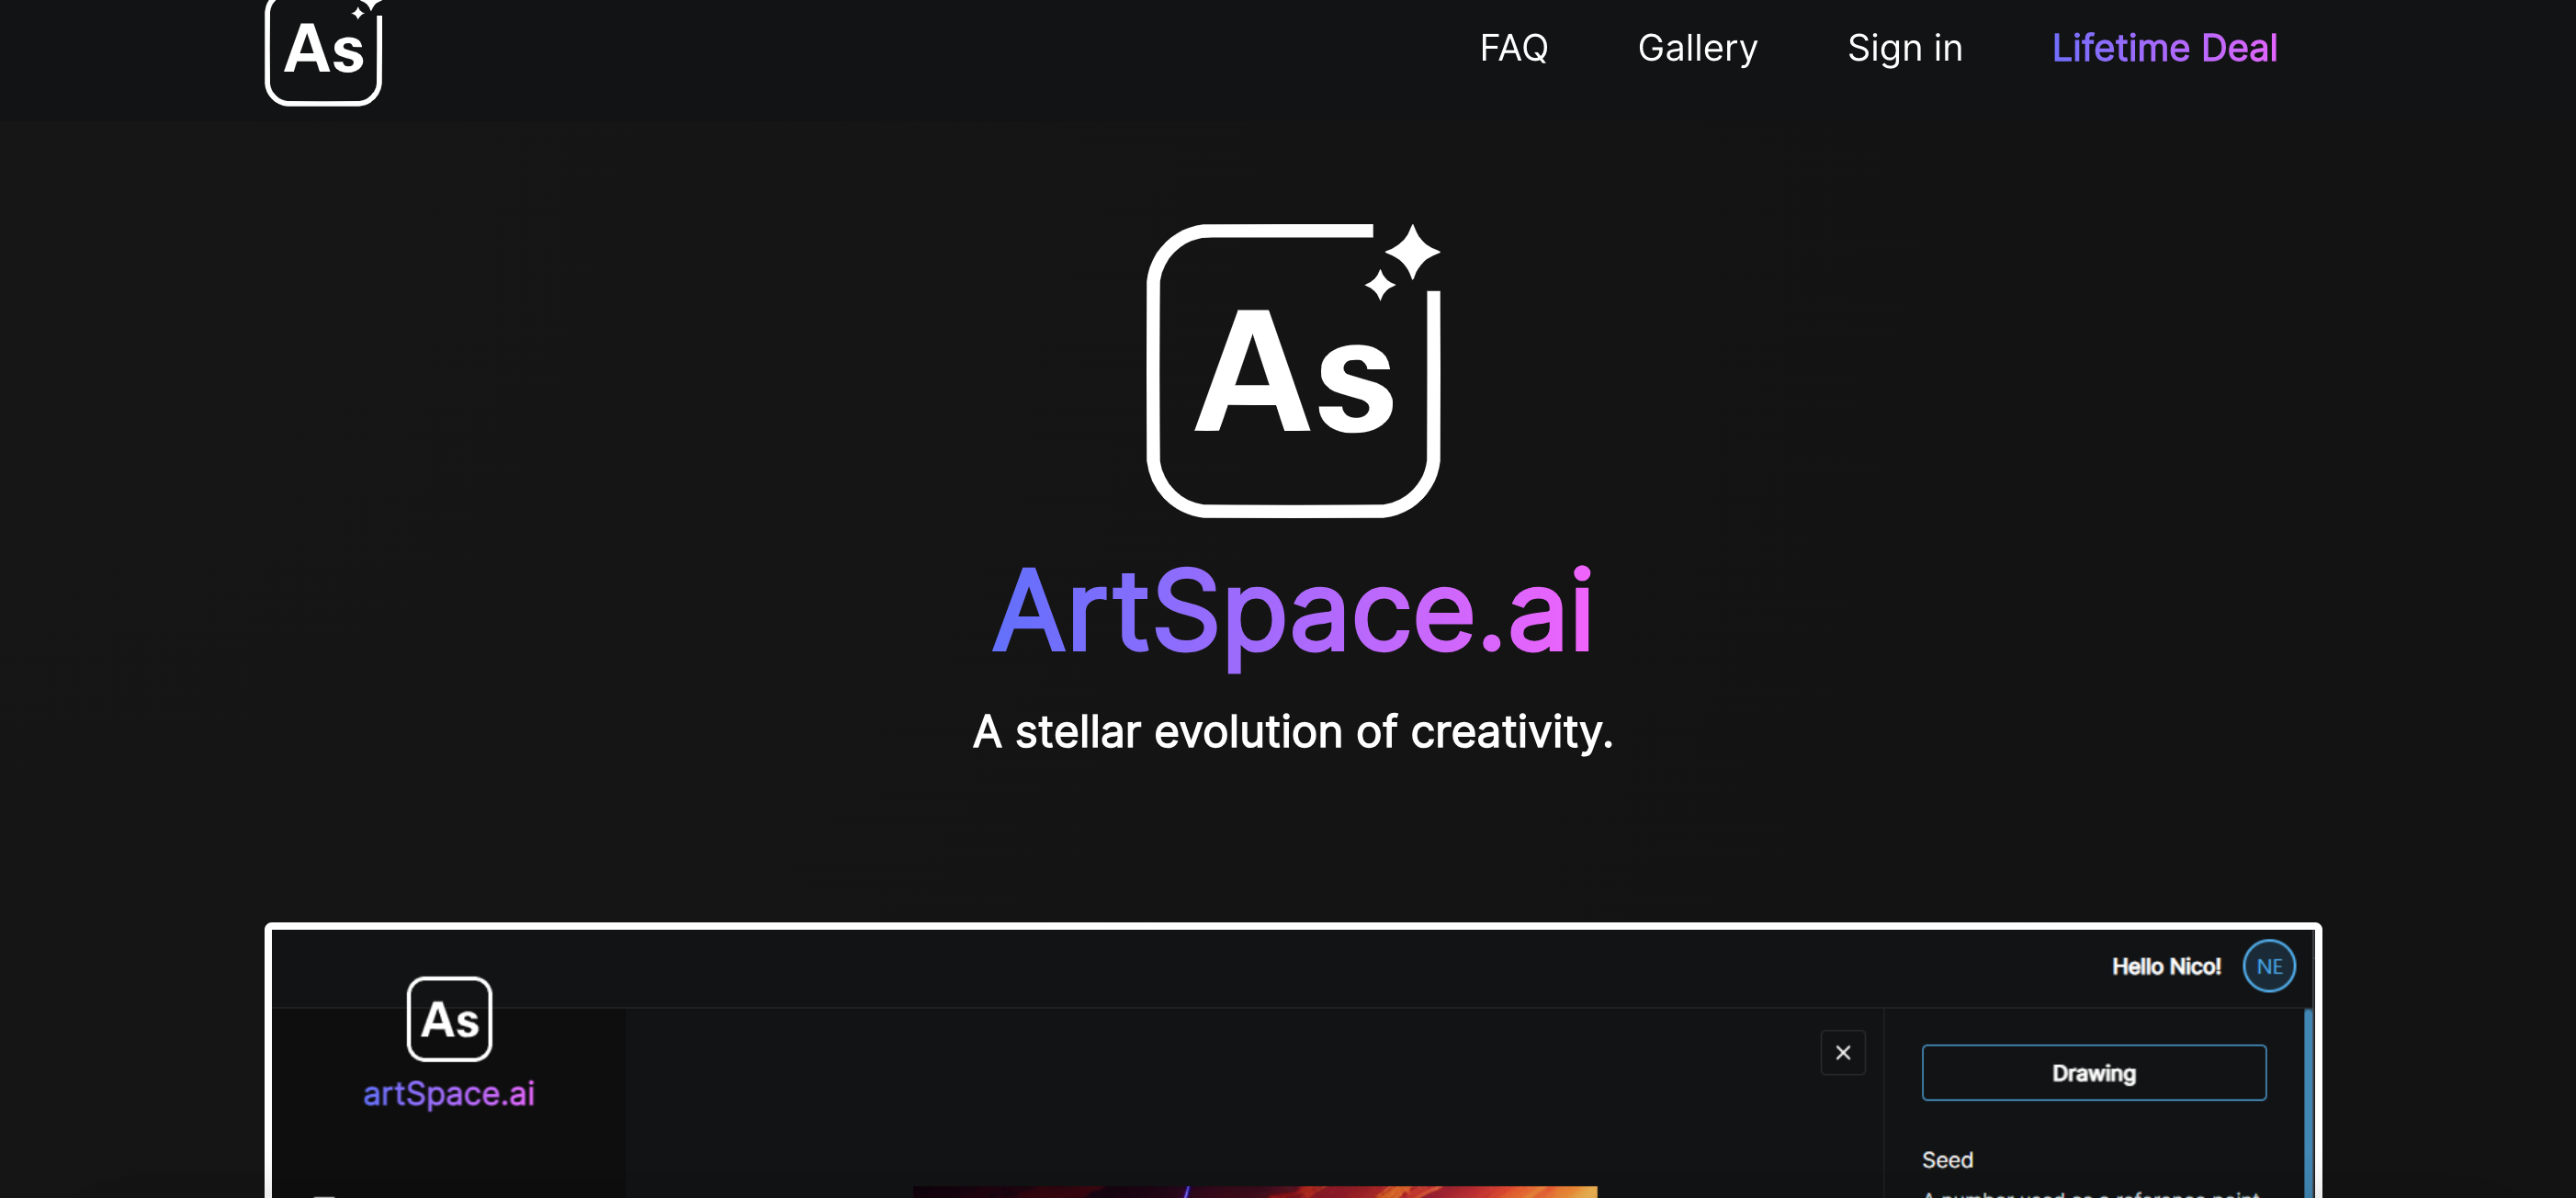 ArtSpace.ai homepage